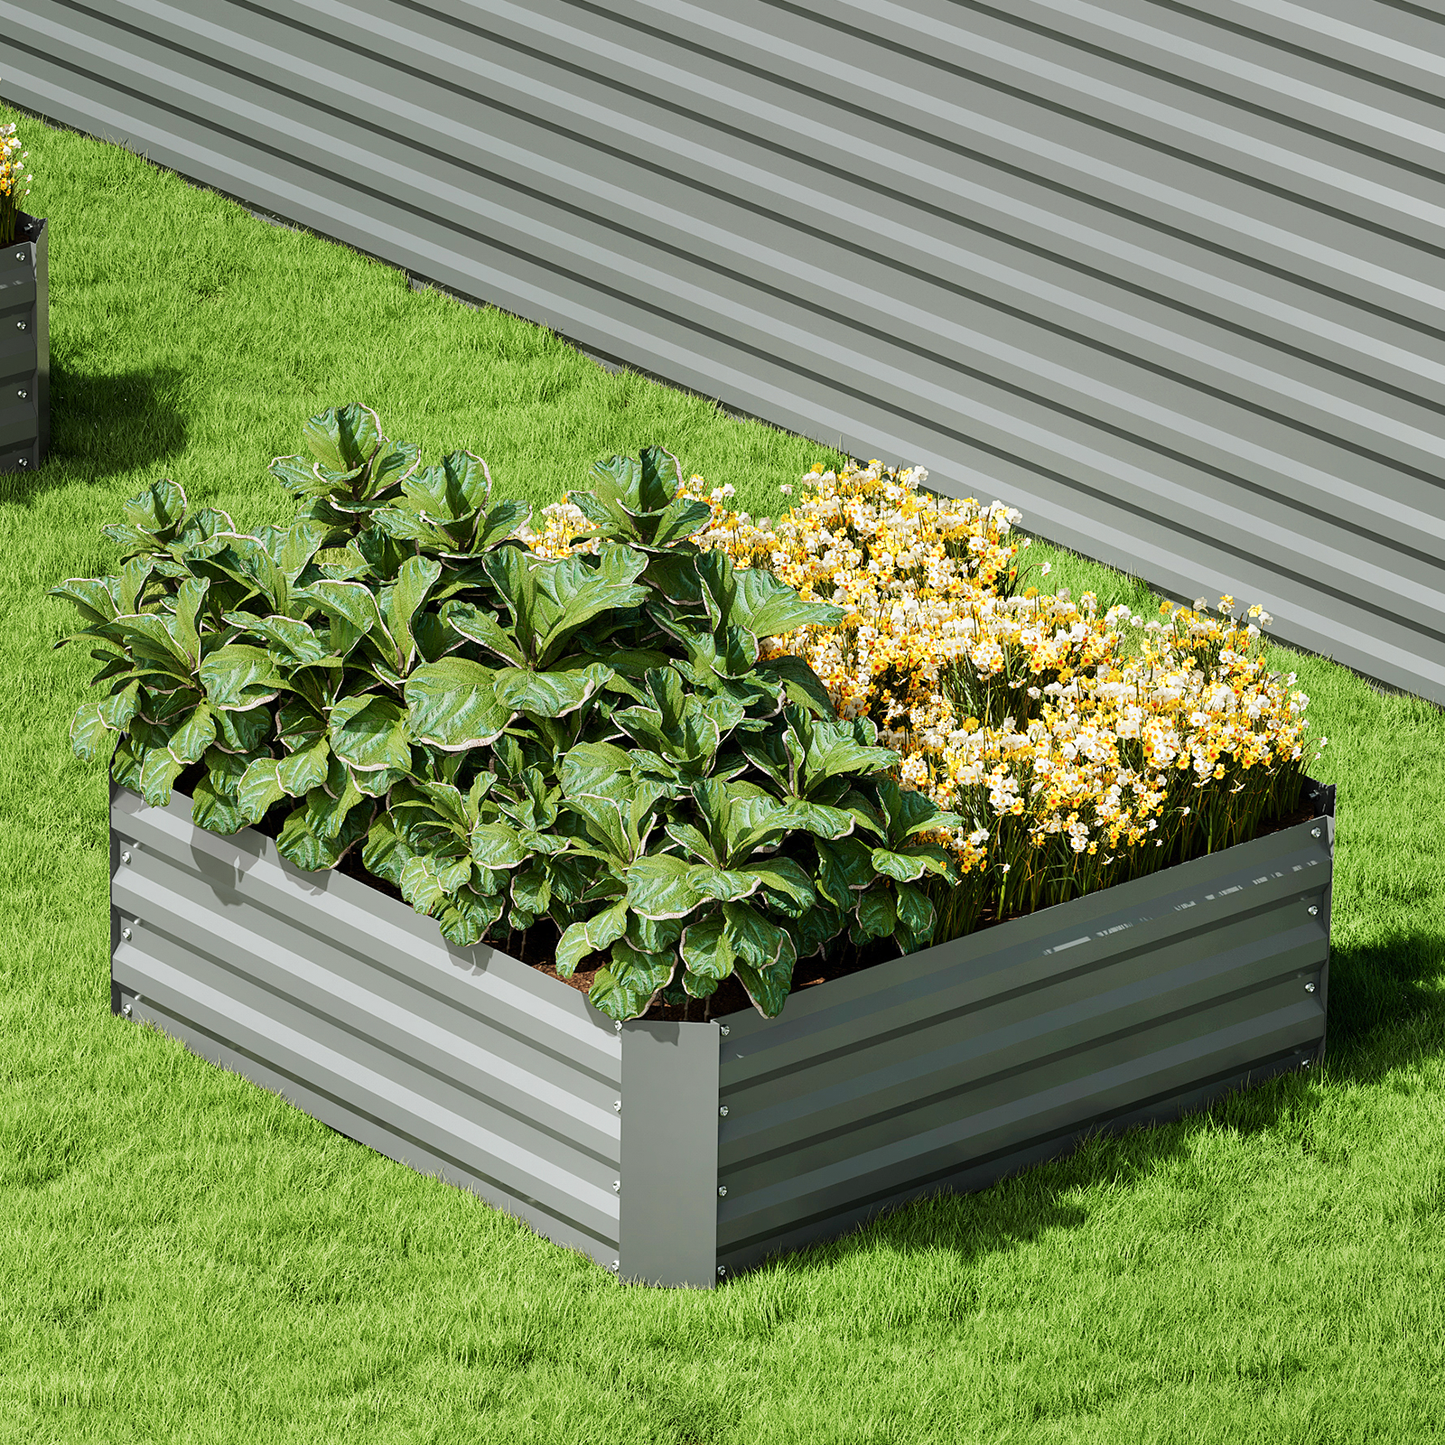 12" H Patio Metal Raised Garden Bed Kit Vegetable Flower Planter 39.5" Square Box